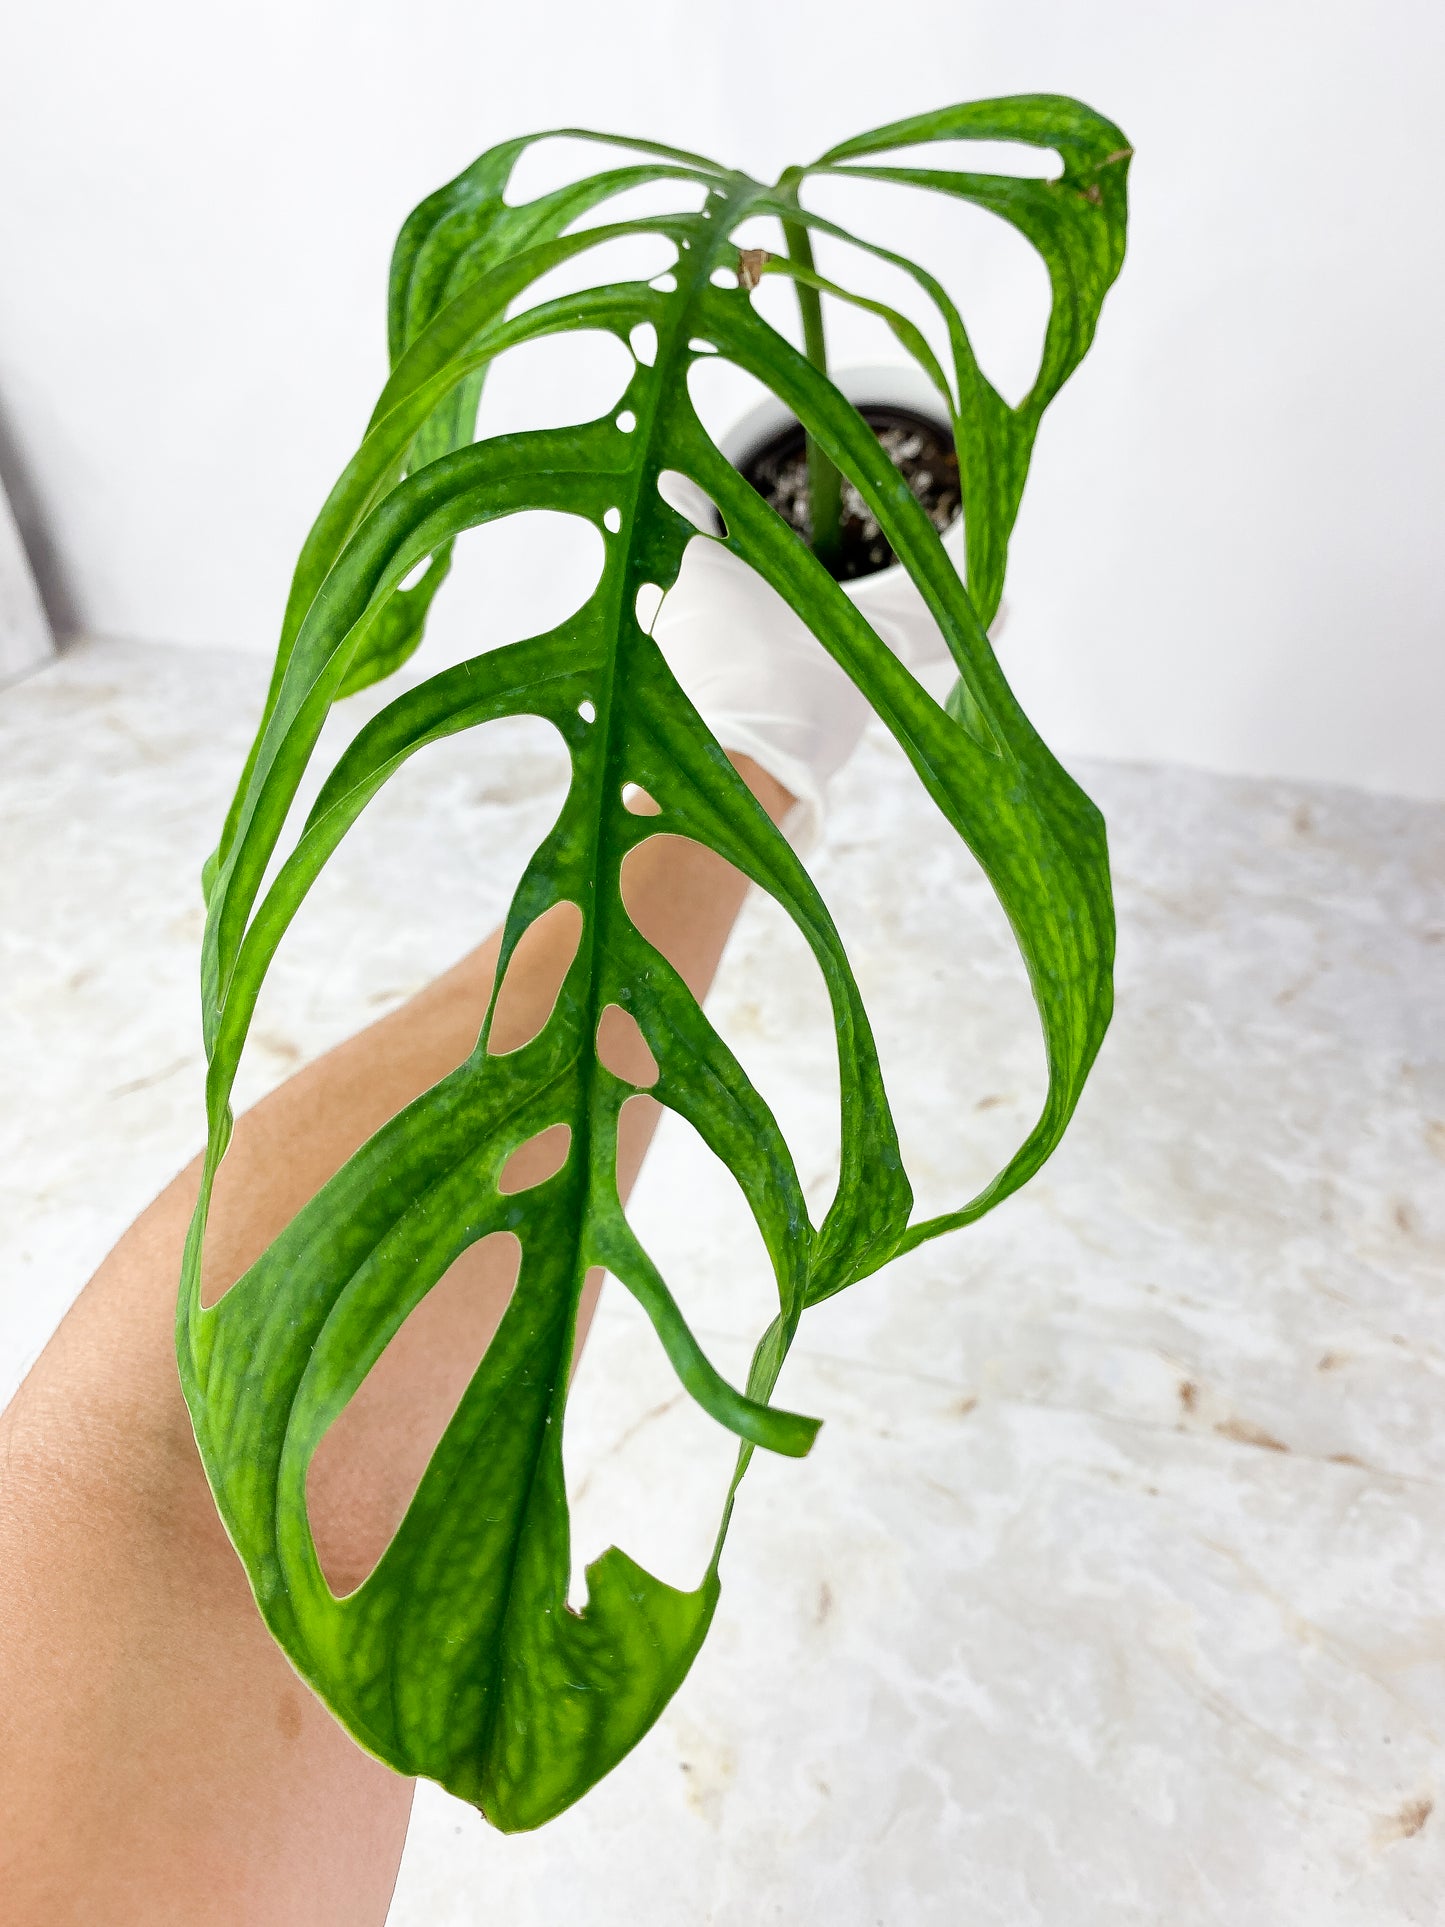 Monstera Esqueleto  Slightly Rooted Cutting XL 1 leaf